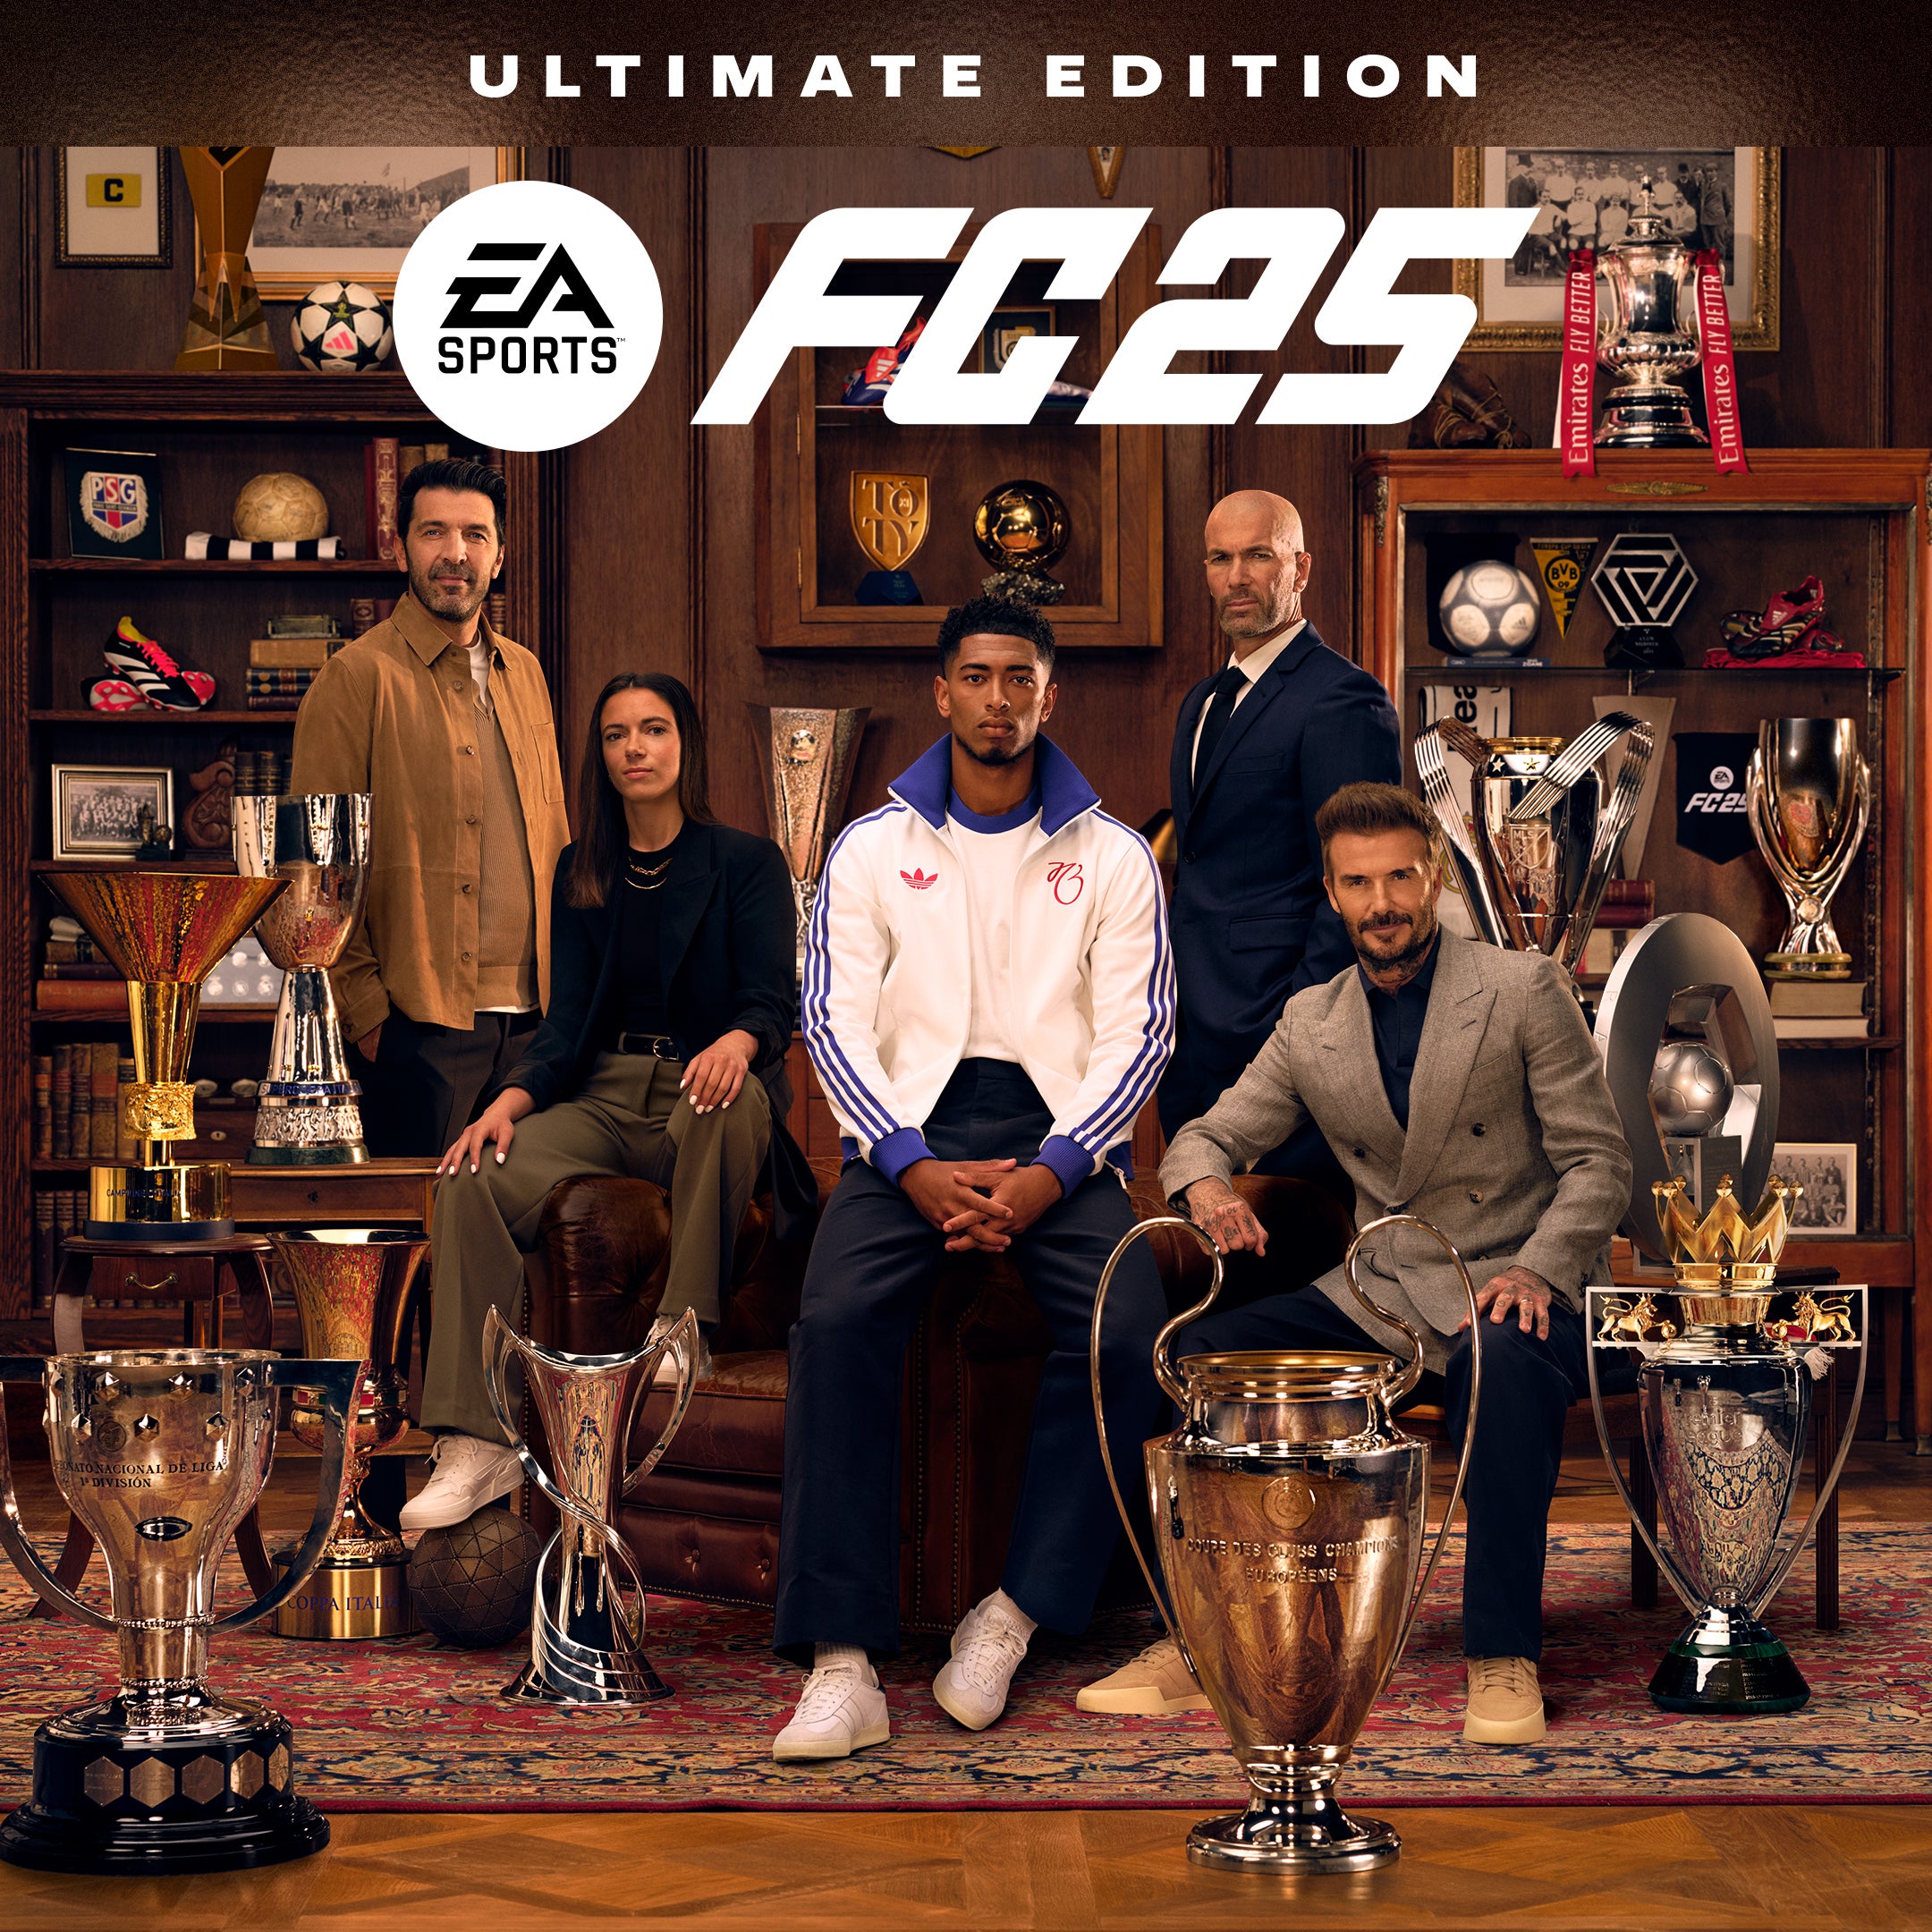 EA Sports FC 25 به طور رسمی معرفی شد و در تاریخ 17 جولای به طور کامل معرفی شد